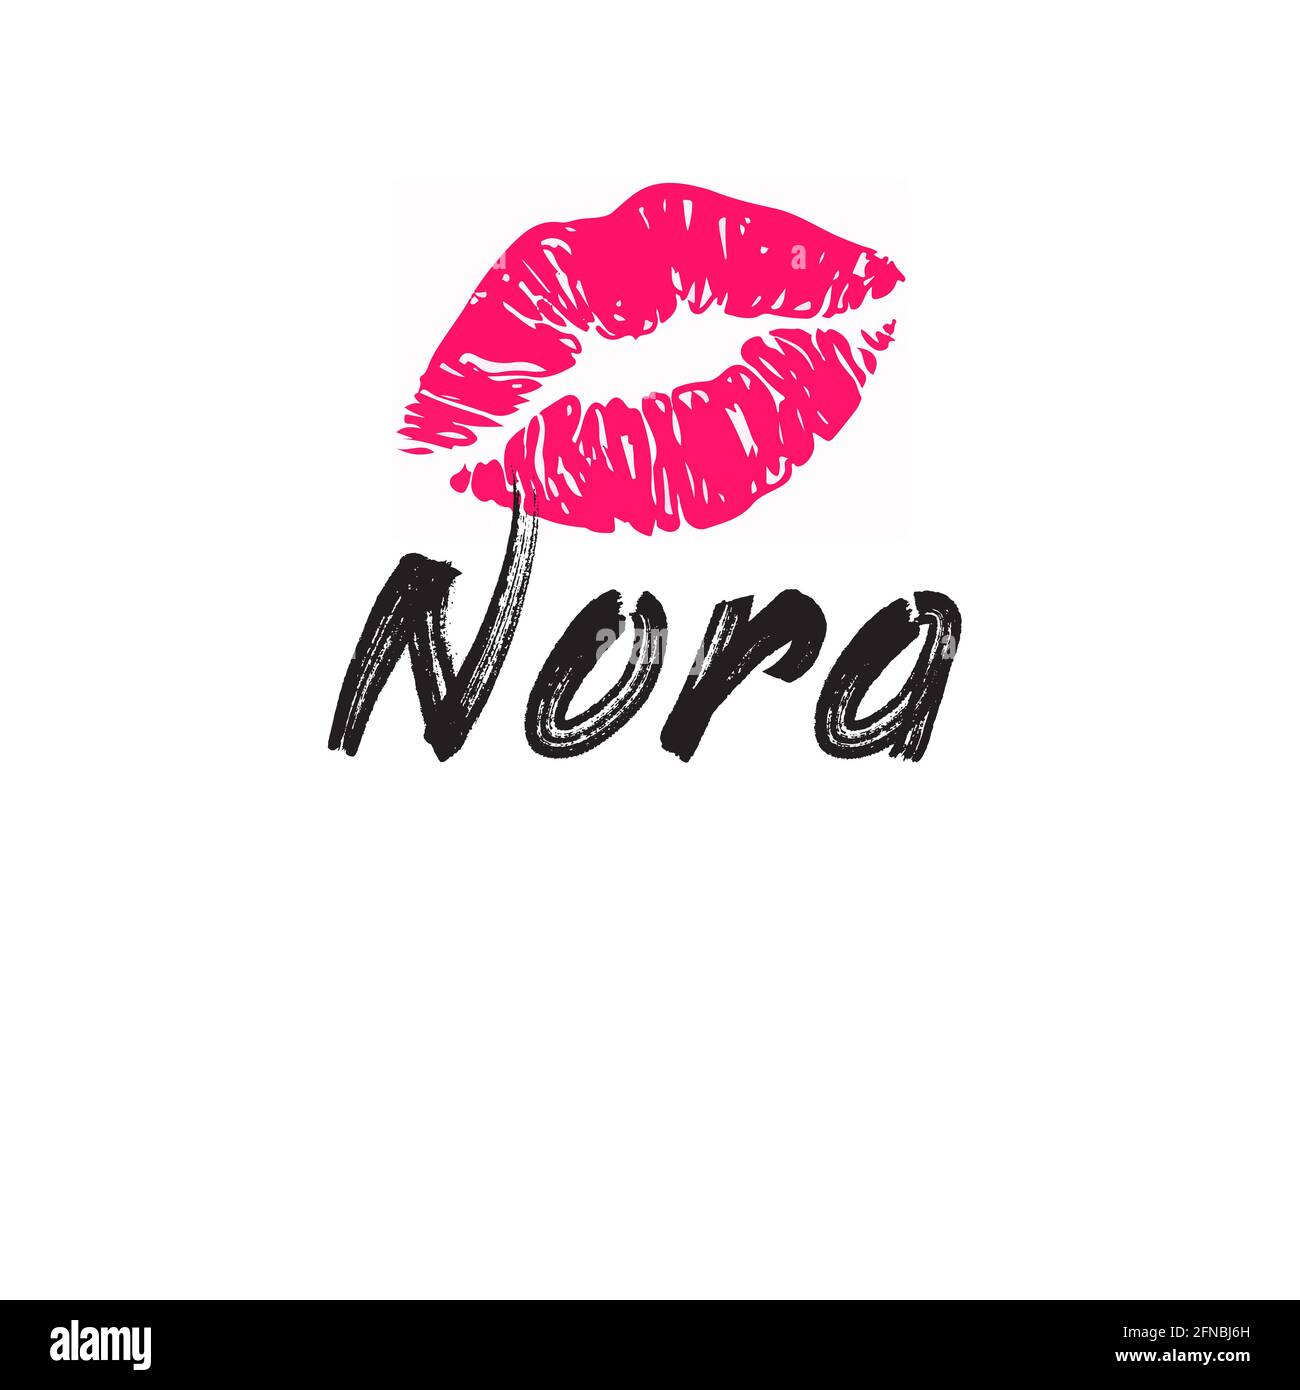 nora girl name Stock Photo